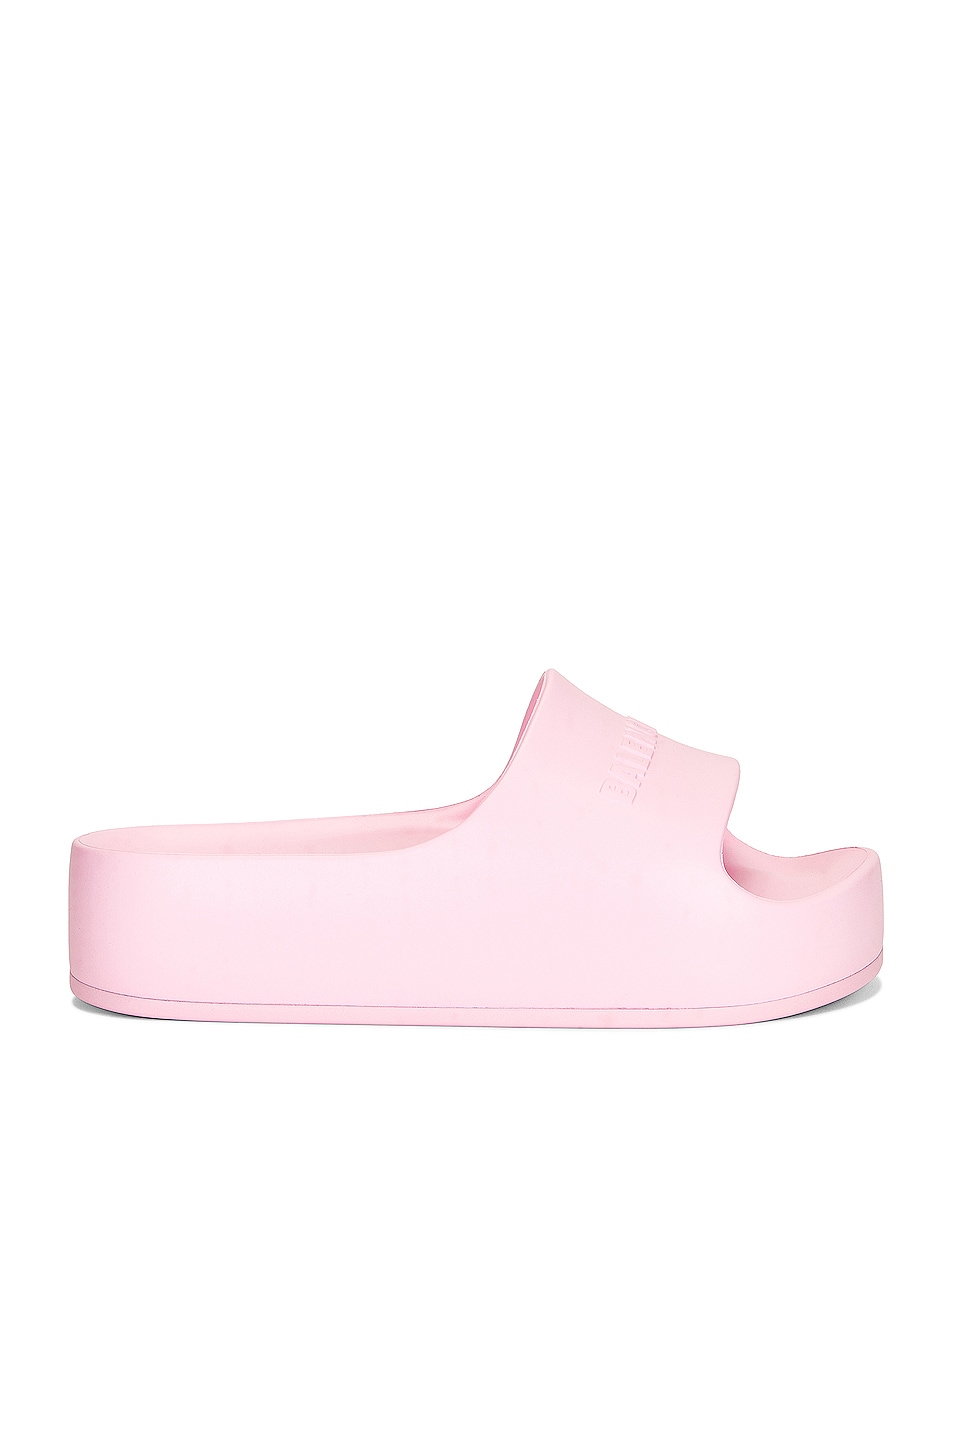 Balenciaga Chunky Slides in Light Pink & White | FWRD